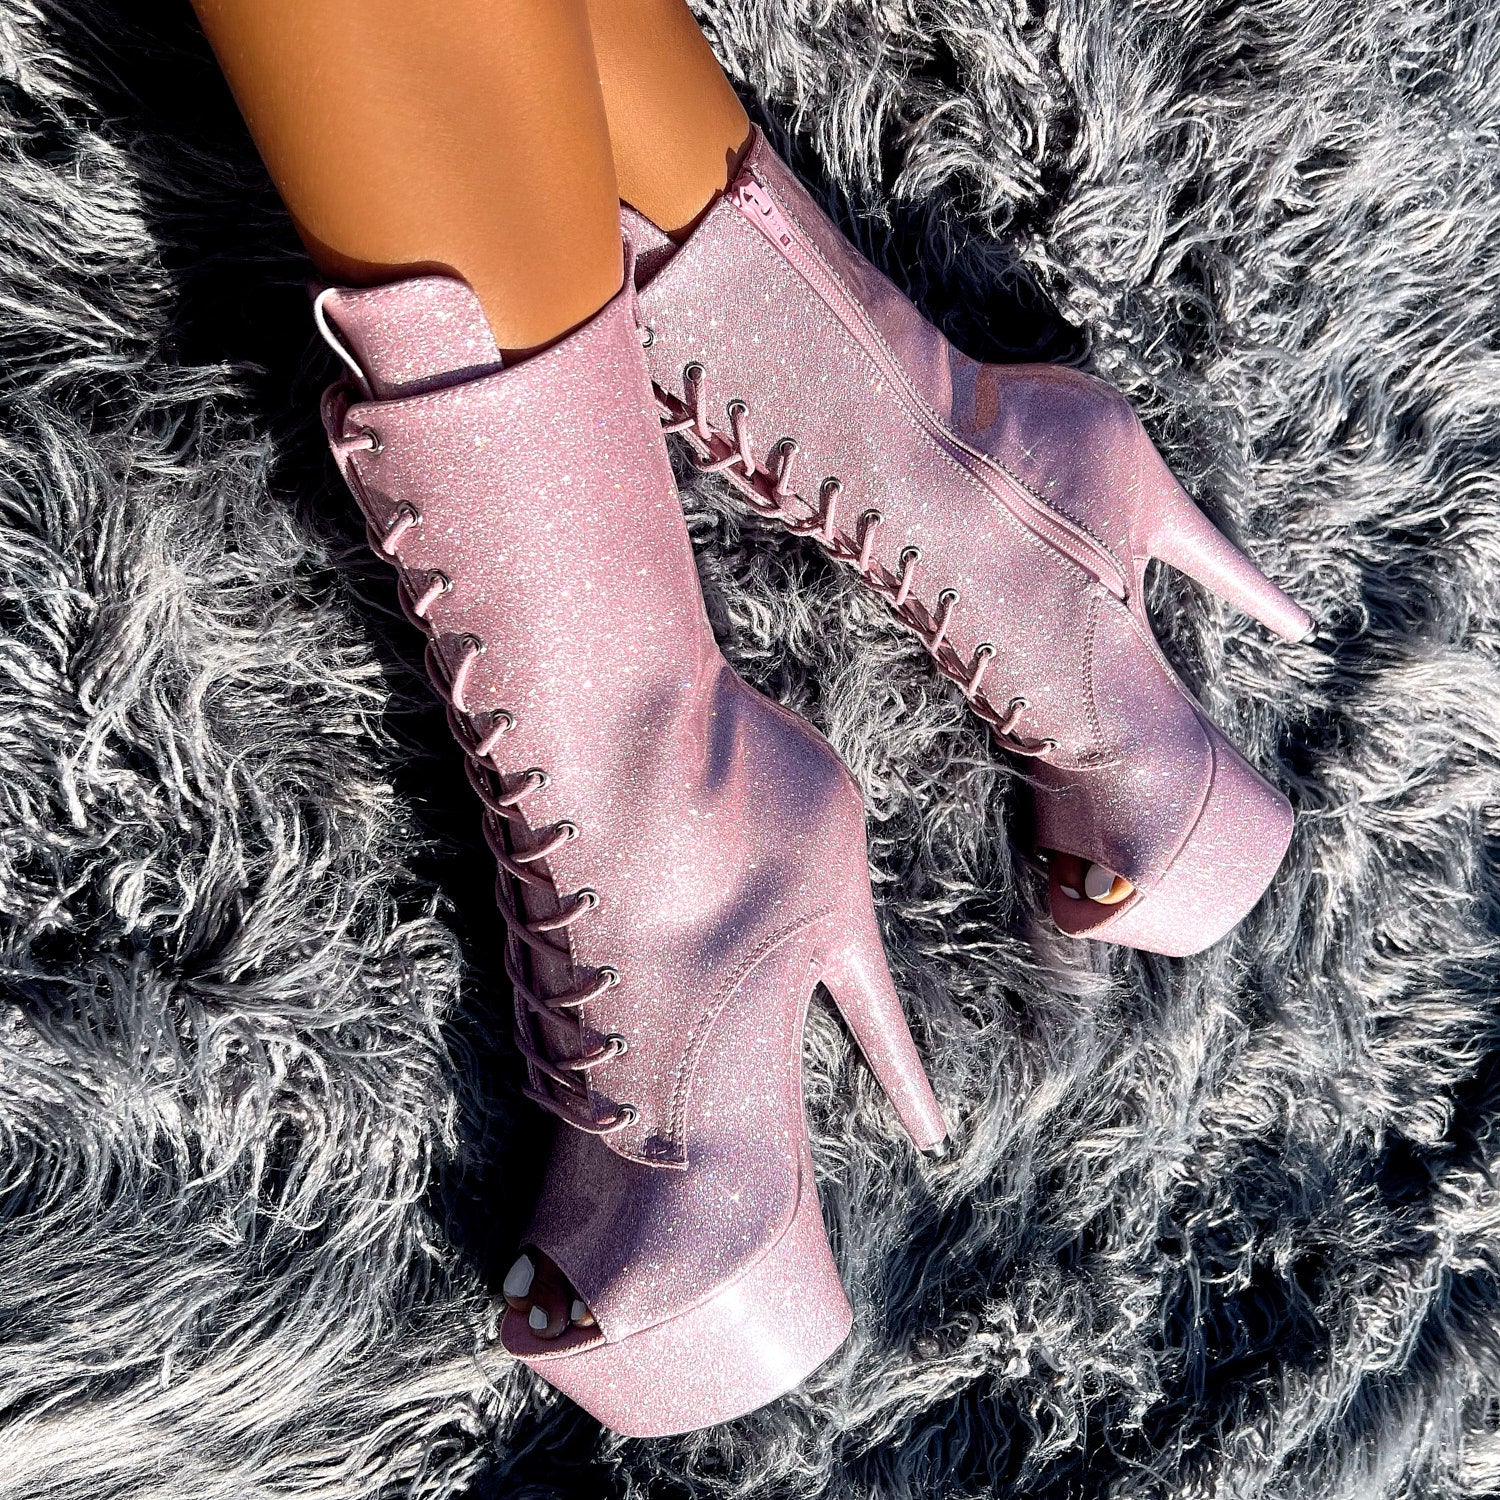 The Glitterati Open Toe Boot - Sugar Baby - 7 INCH, stripper shoe, stripper heel, pole heel, not a pleaser, platform, dancer, pole dance, floor work